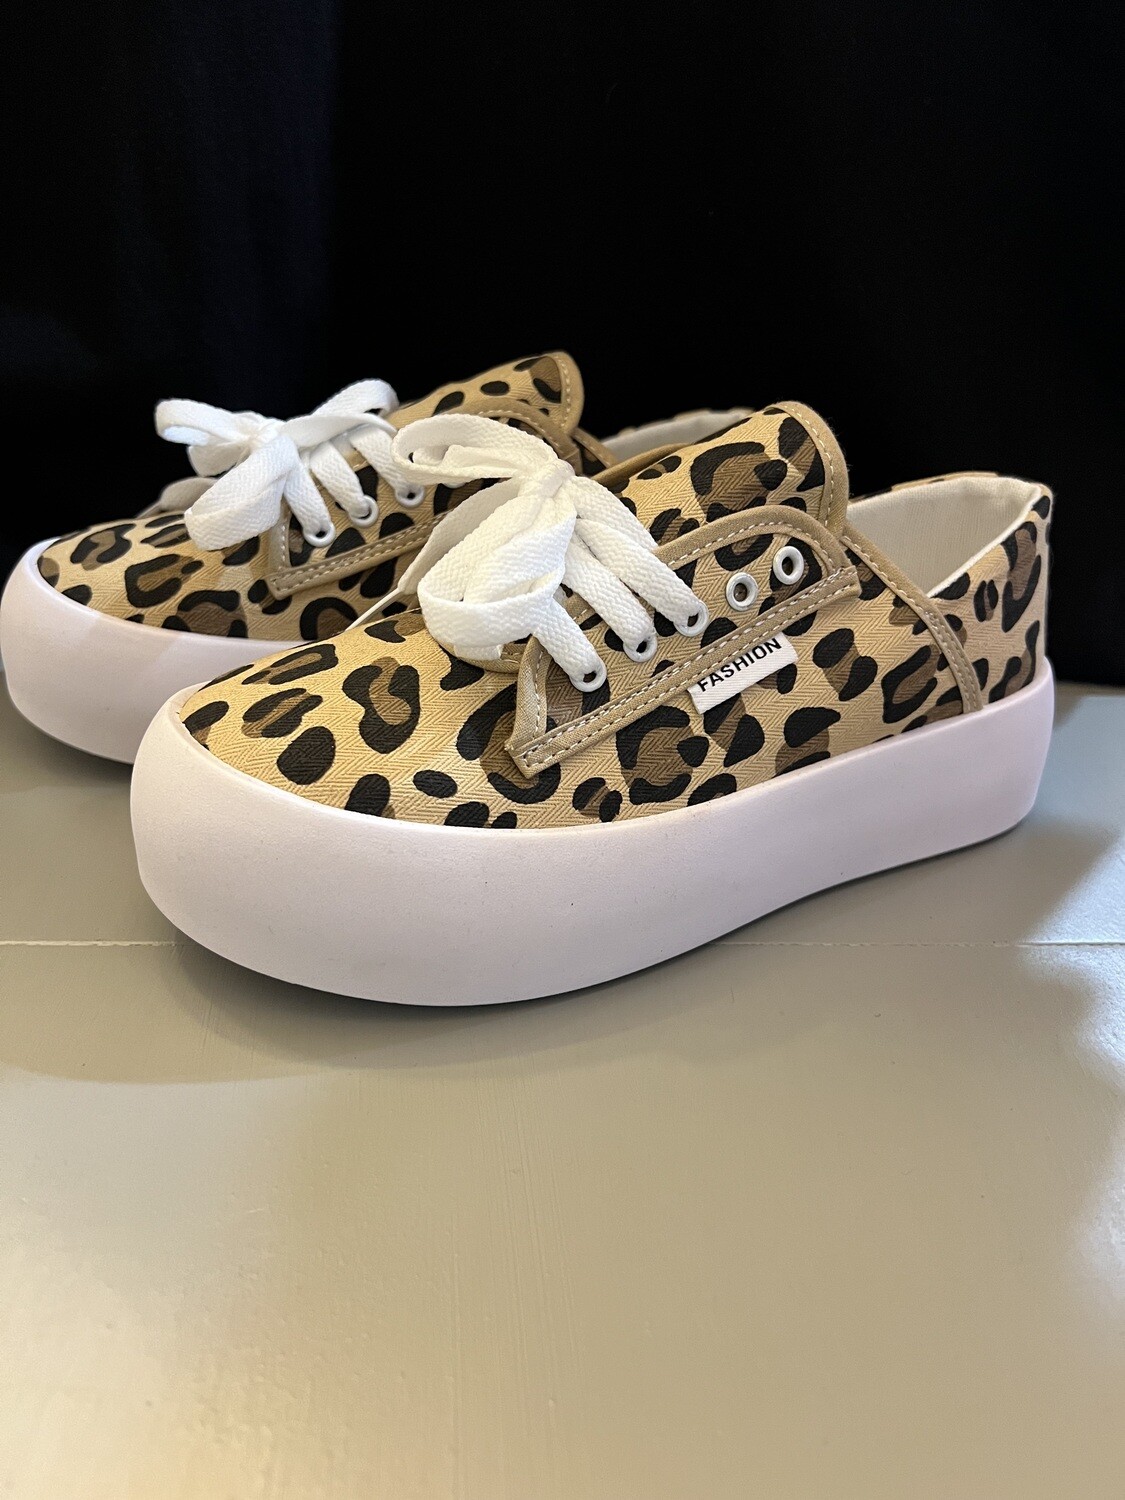 Cheetah print sneaker shoes